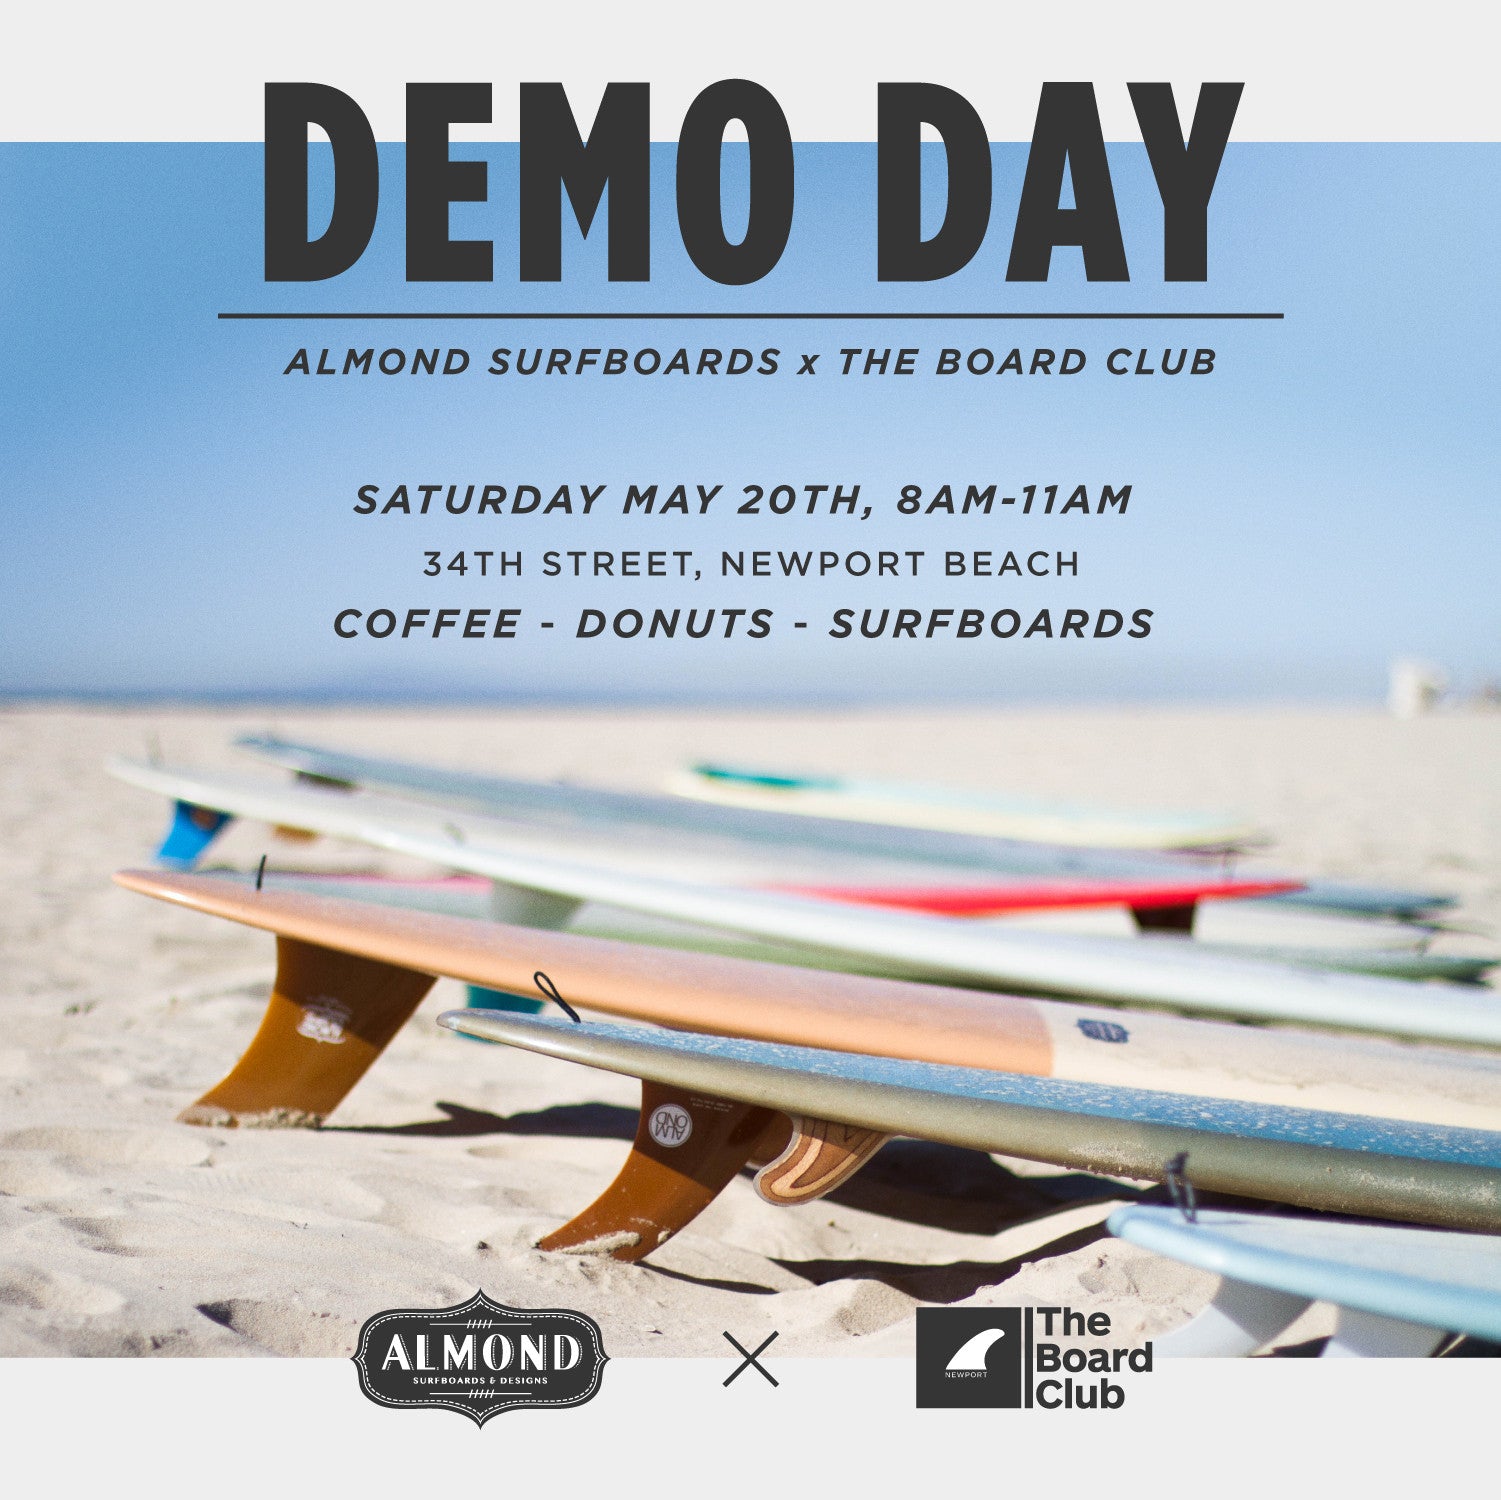 Surfboard Demo on Saturday